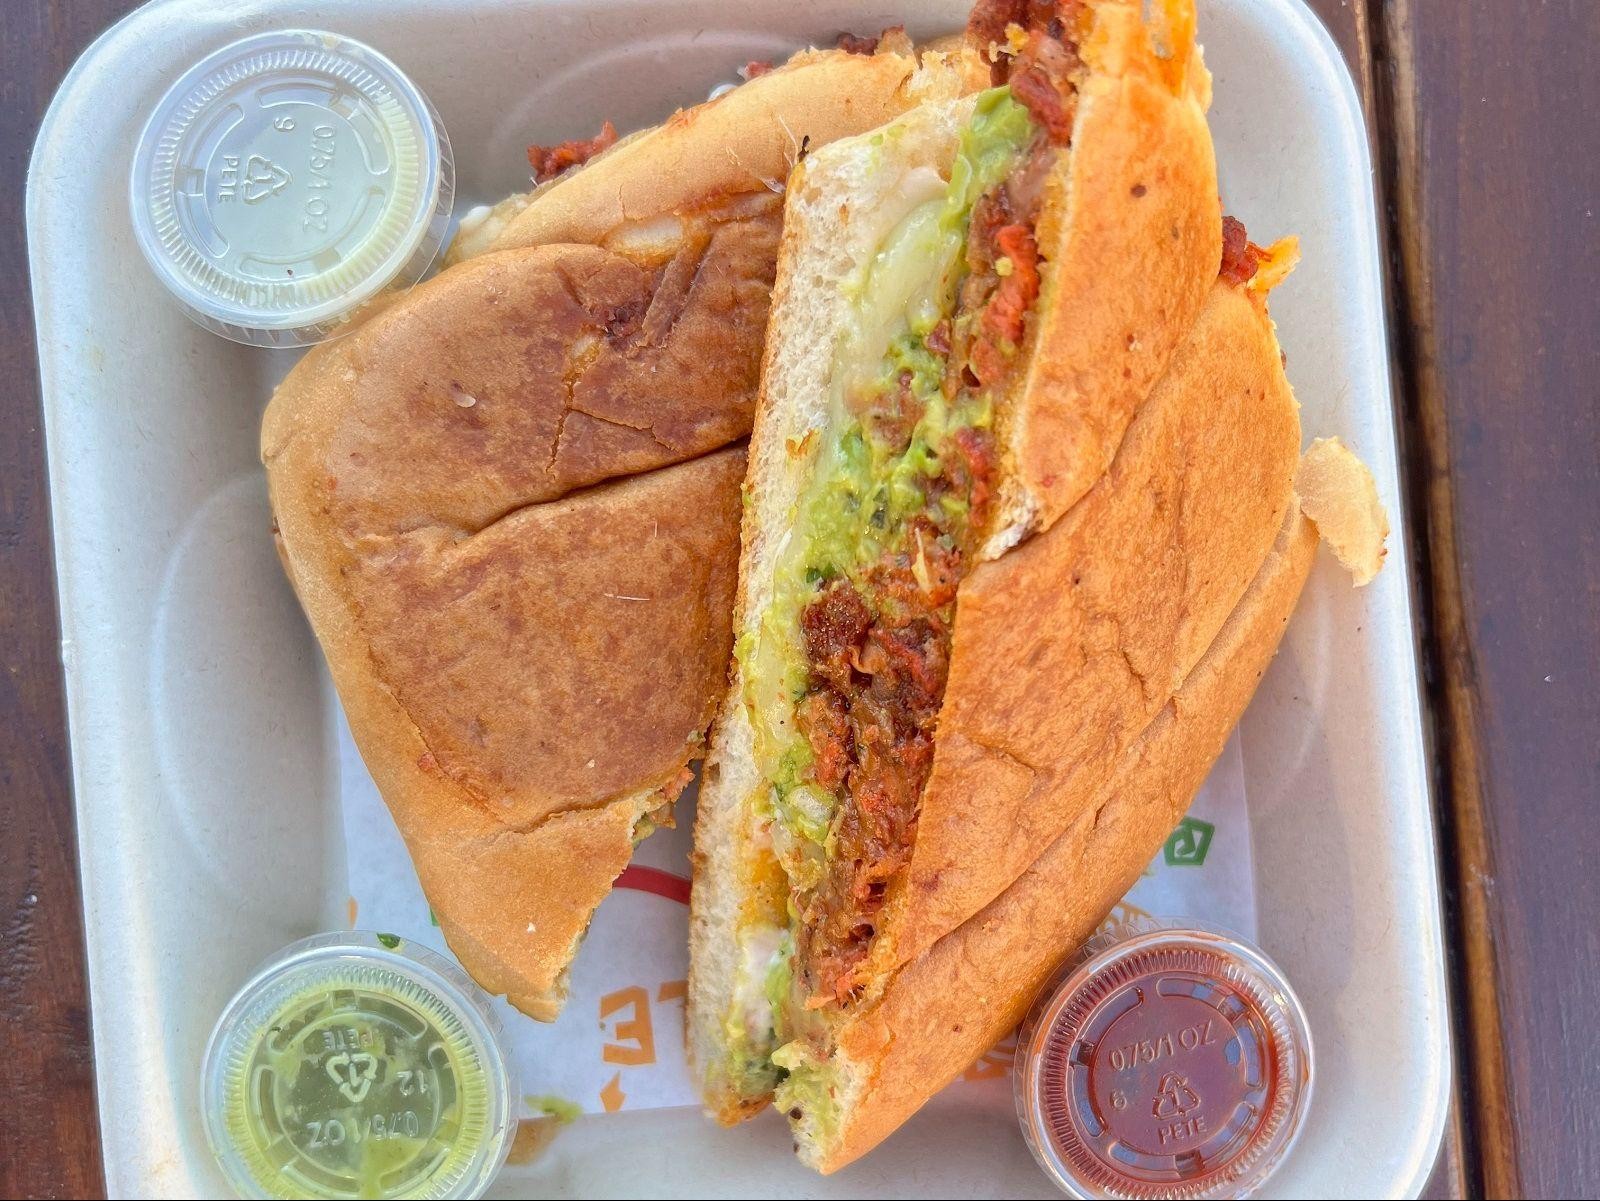 Tortas (Mexican Sandwich